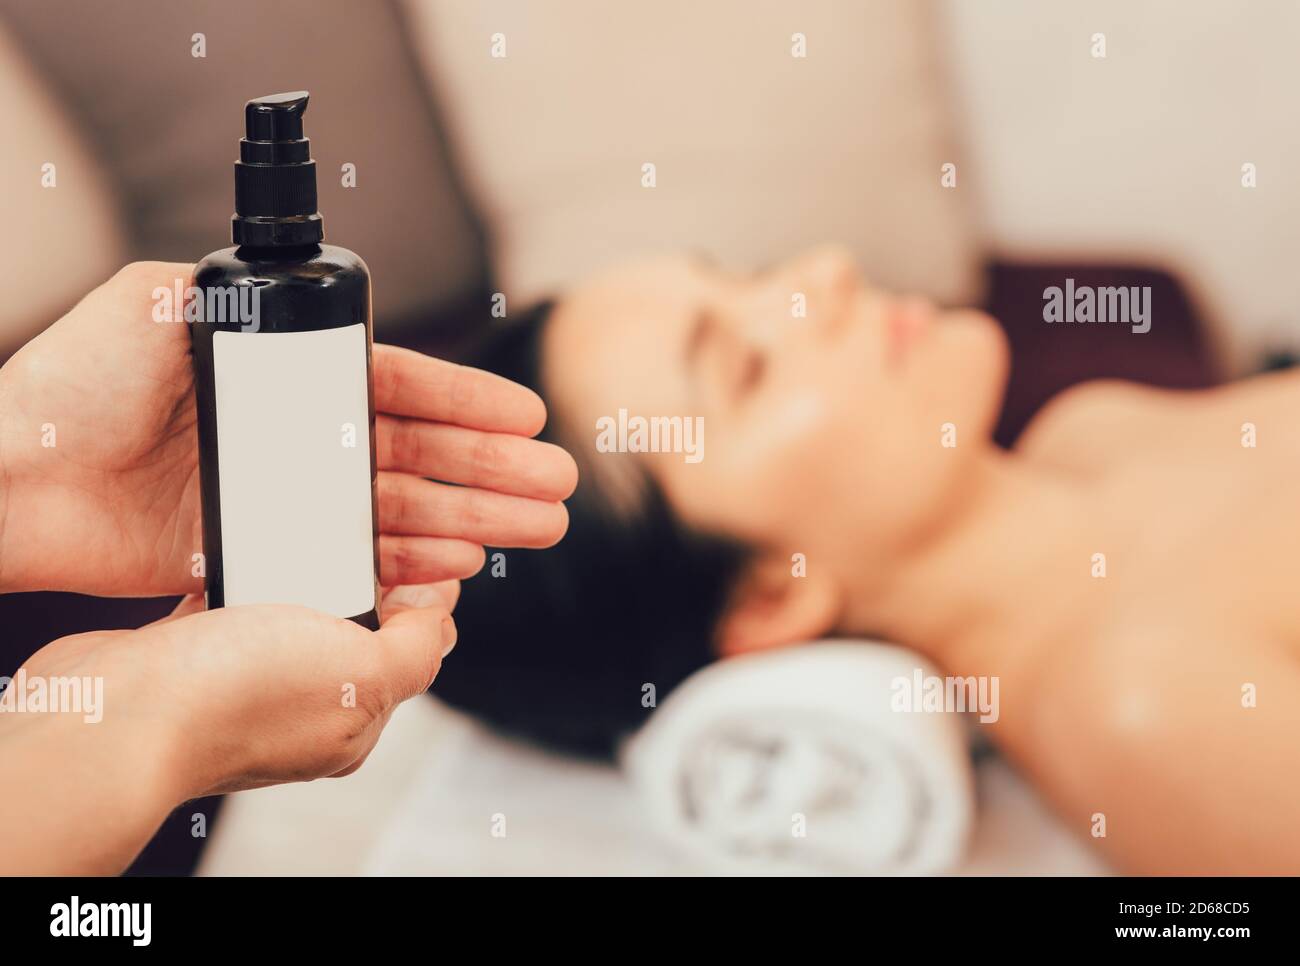 Ayurvedic massage using aroma oils. Thai body massage, aroma relaxation. Massage oil close-up, beautiful woman in soft focus Stock Photo